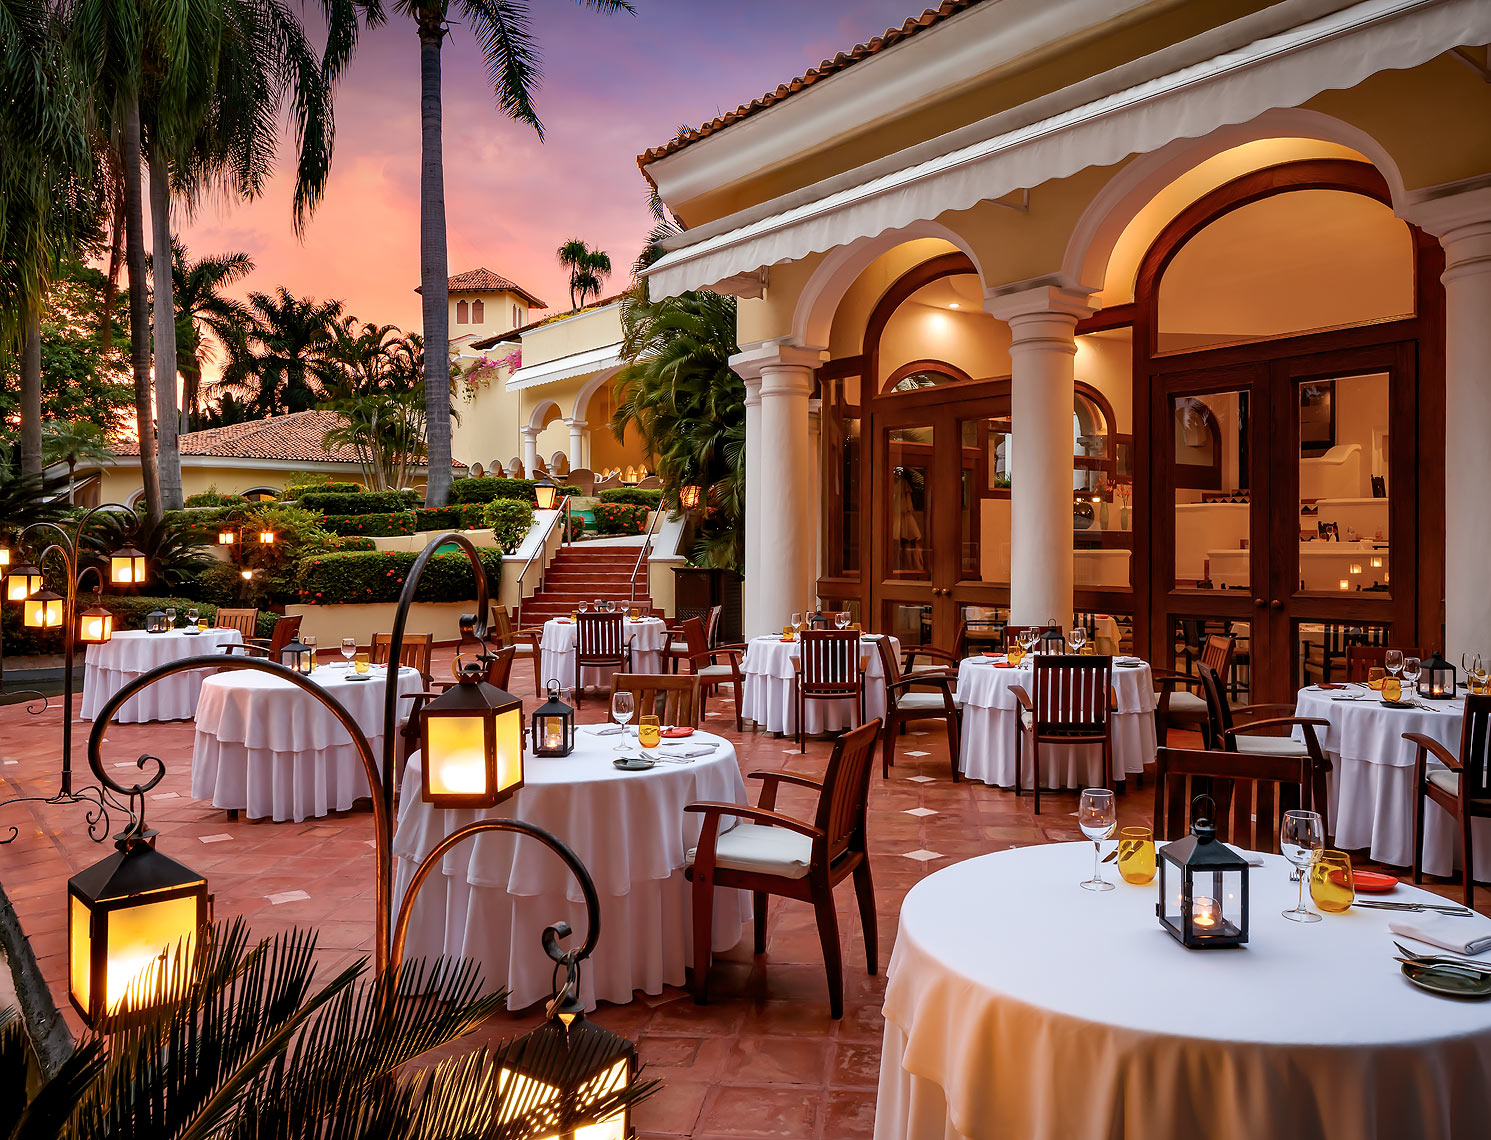 Emiliano Restaurant at Casa Velas Hotel - Puerto Vallarta, Mexico. Hotel Photographer